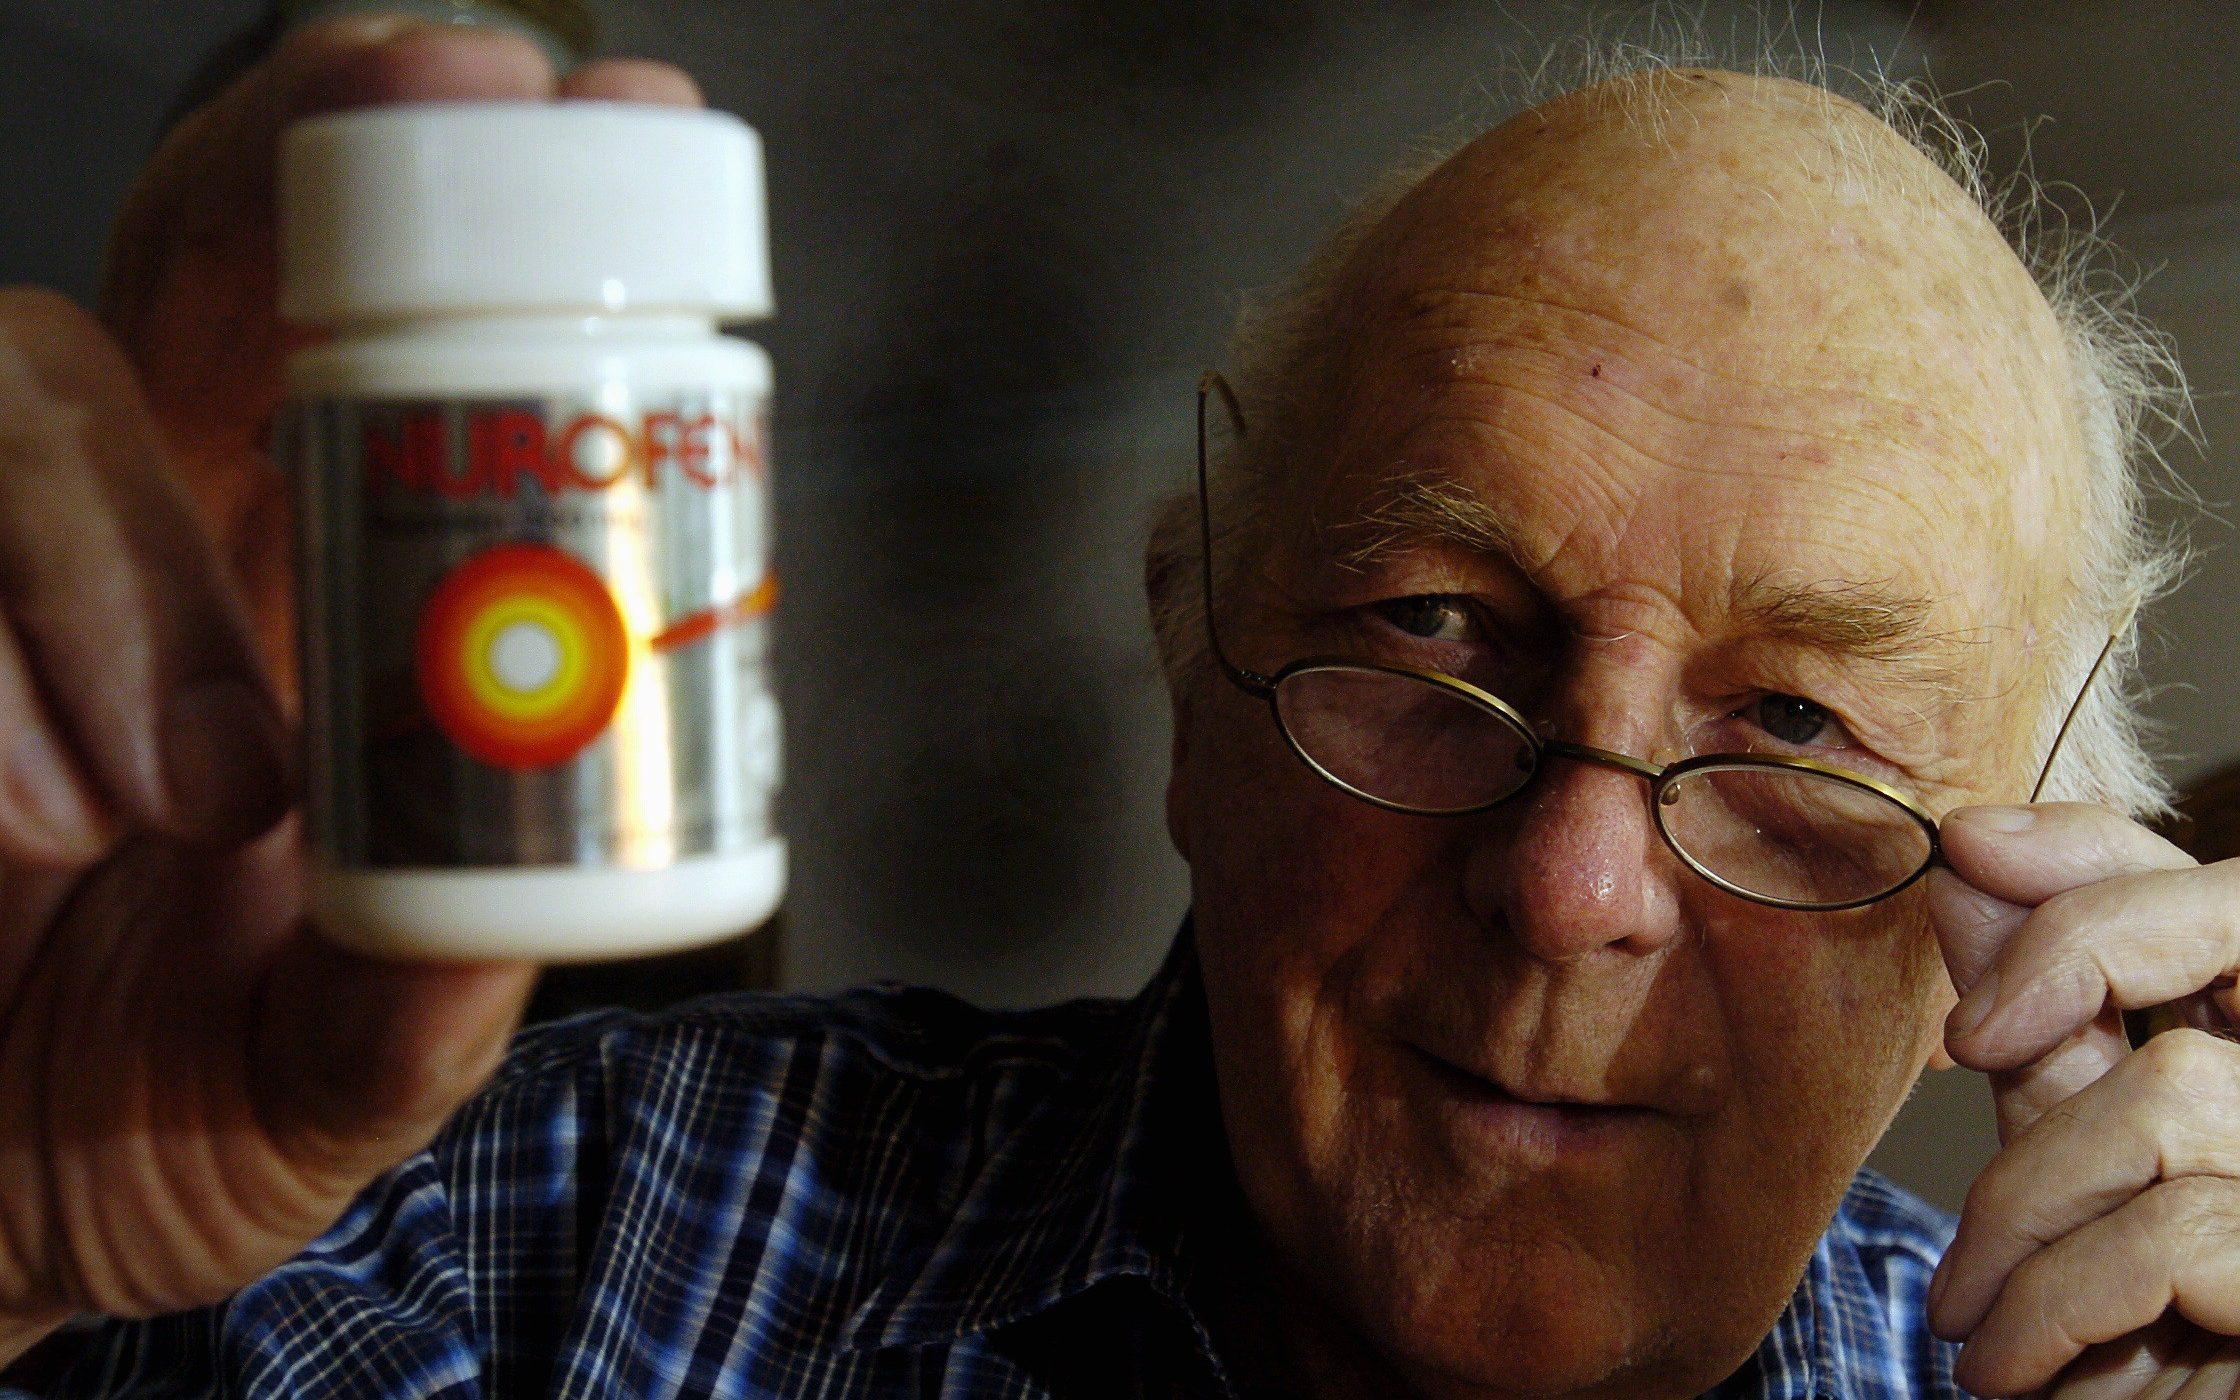 An elderly man holds up a bottle of Nurofen painkillers.